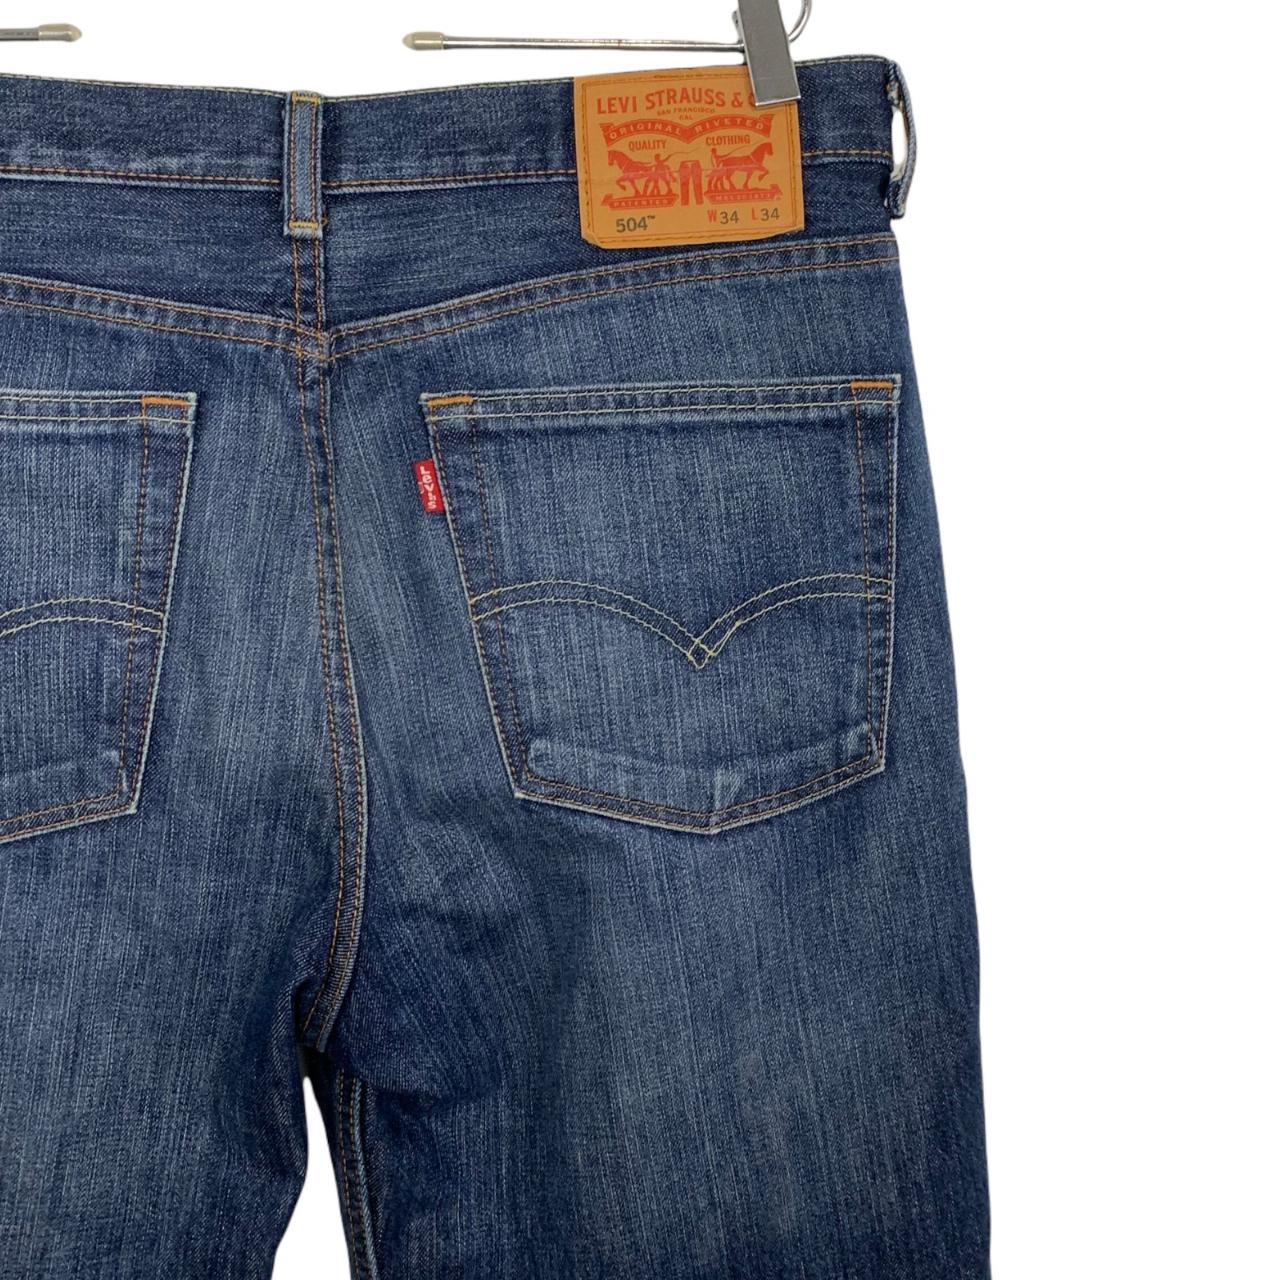 Levi’s 504 Blue Jeans Mens Size 36x28 Medium Wash... - Depop